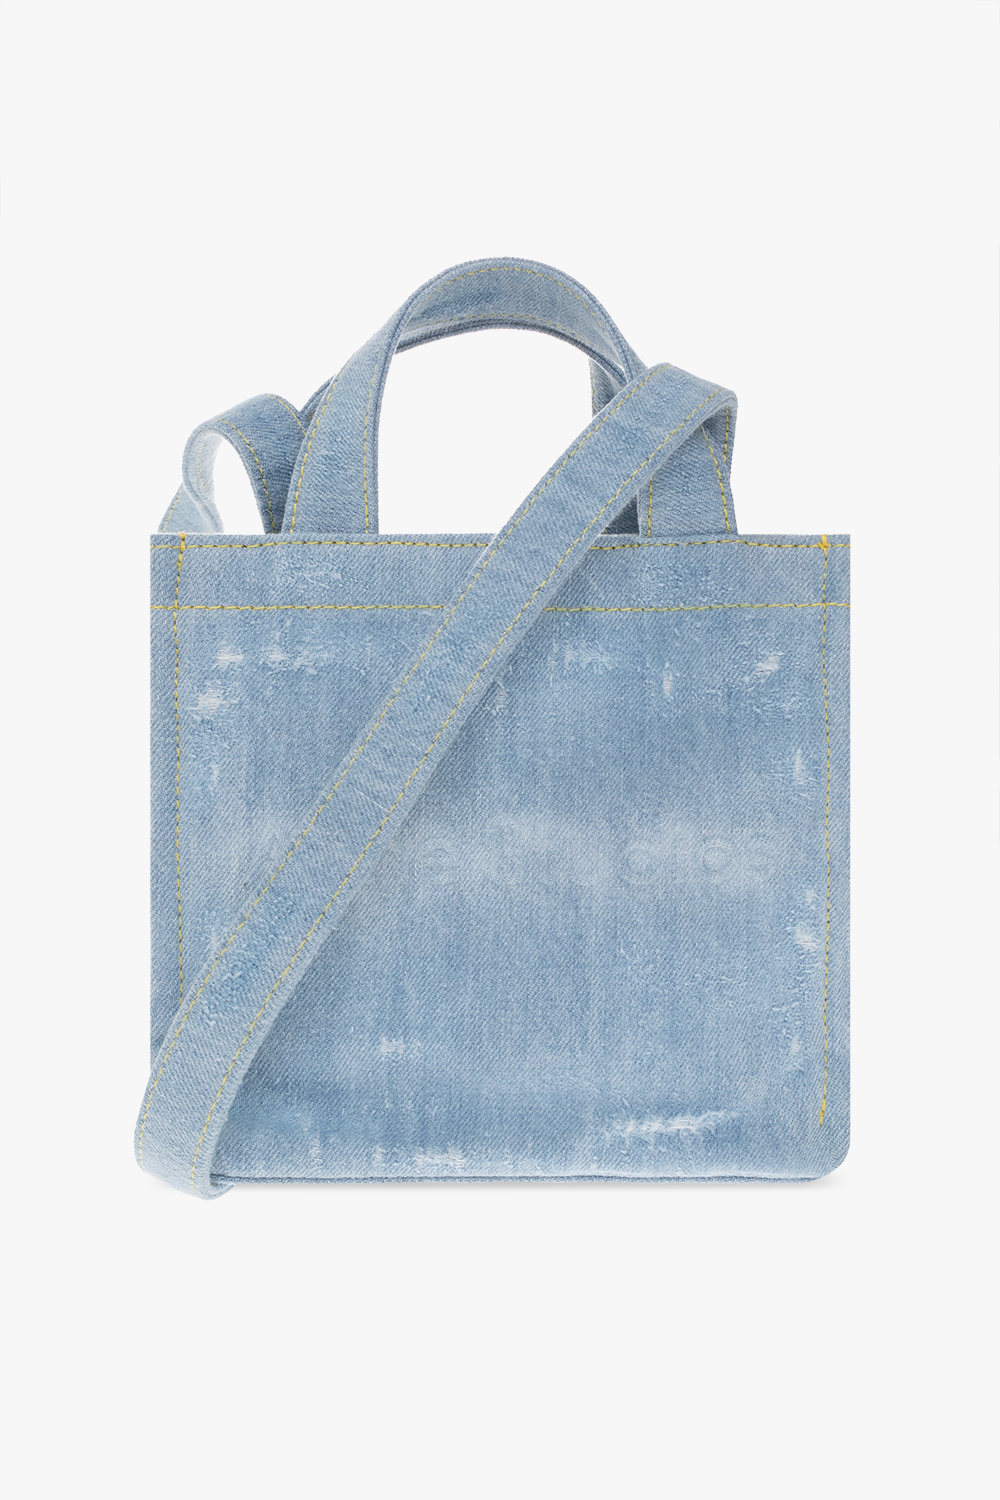 Acne Studios longchamp medium le pliage cuir top handle bag item